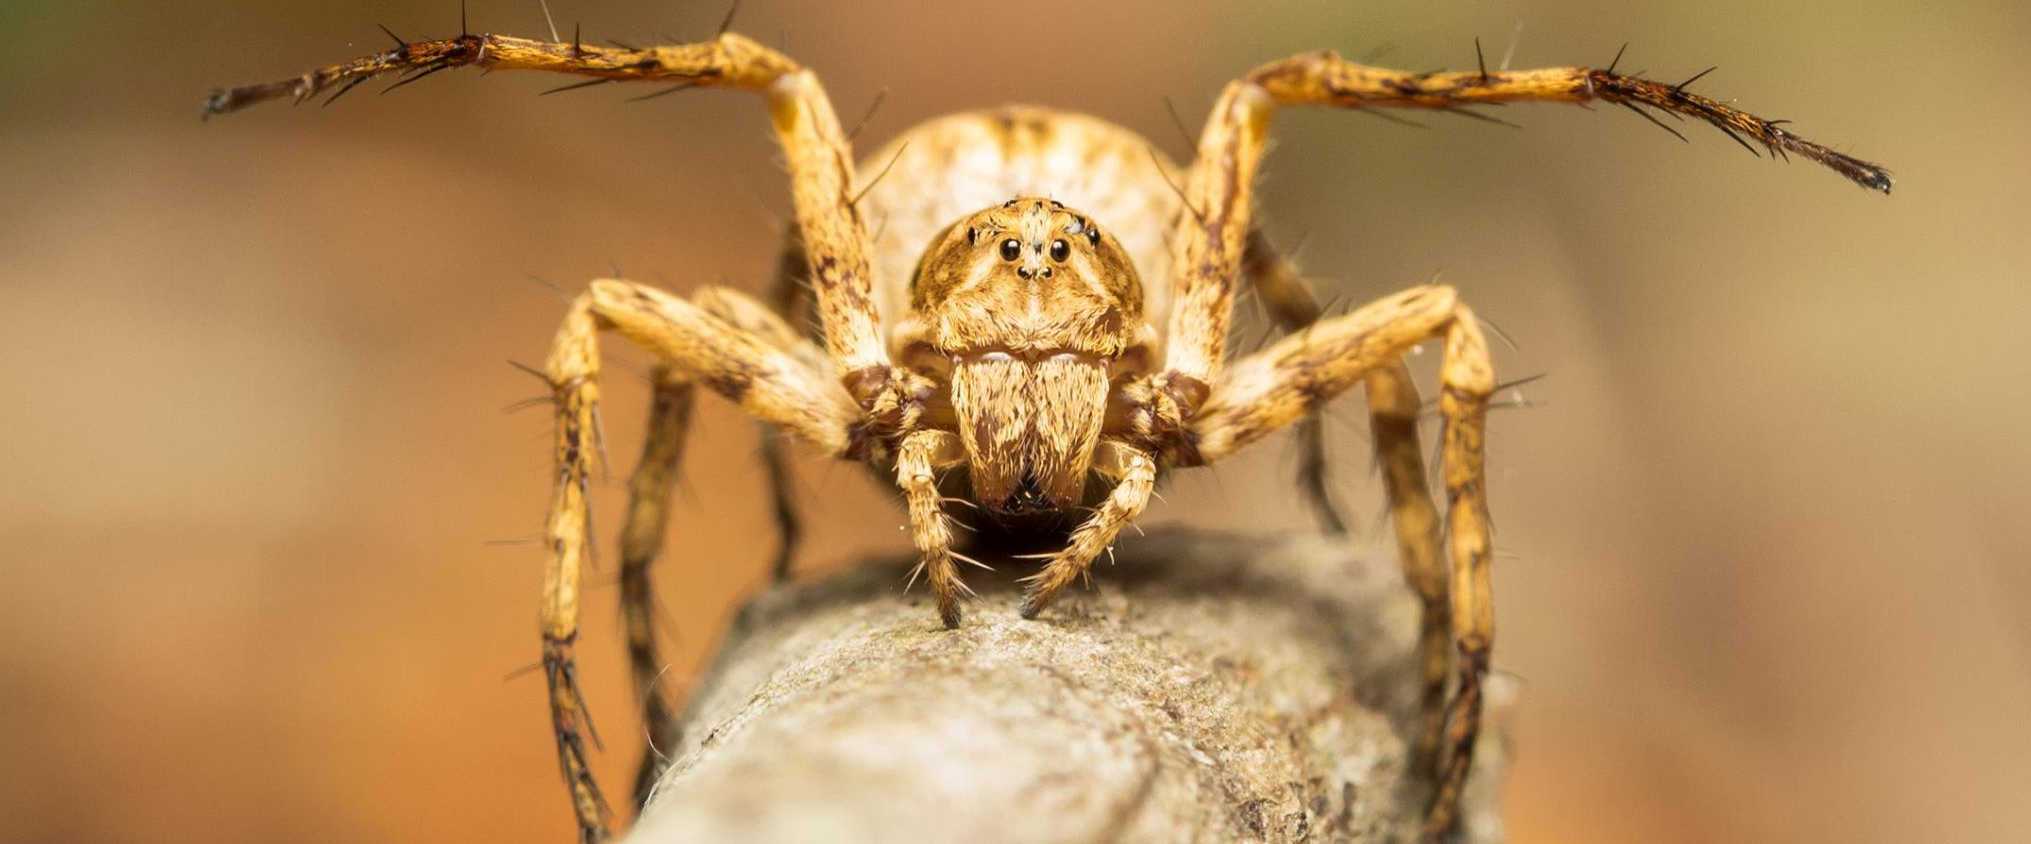 Oyopidae - Lynx Spider photo:Chris Scott